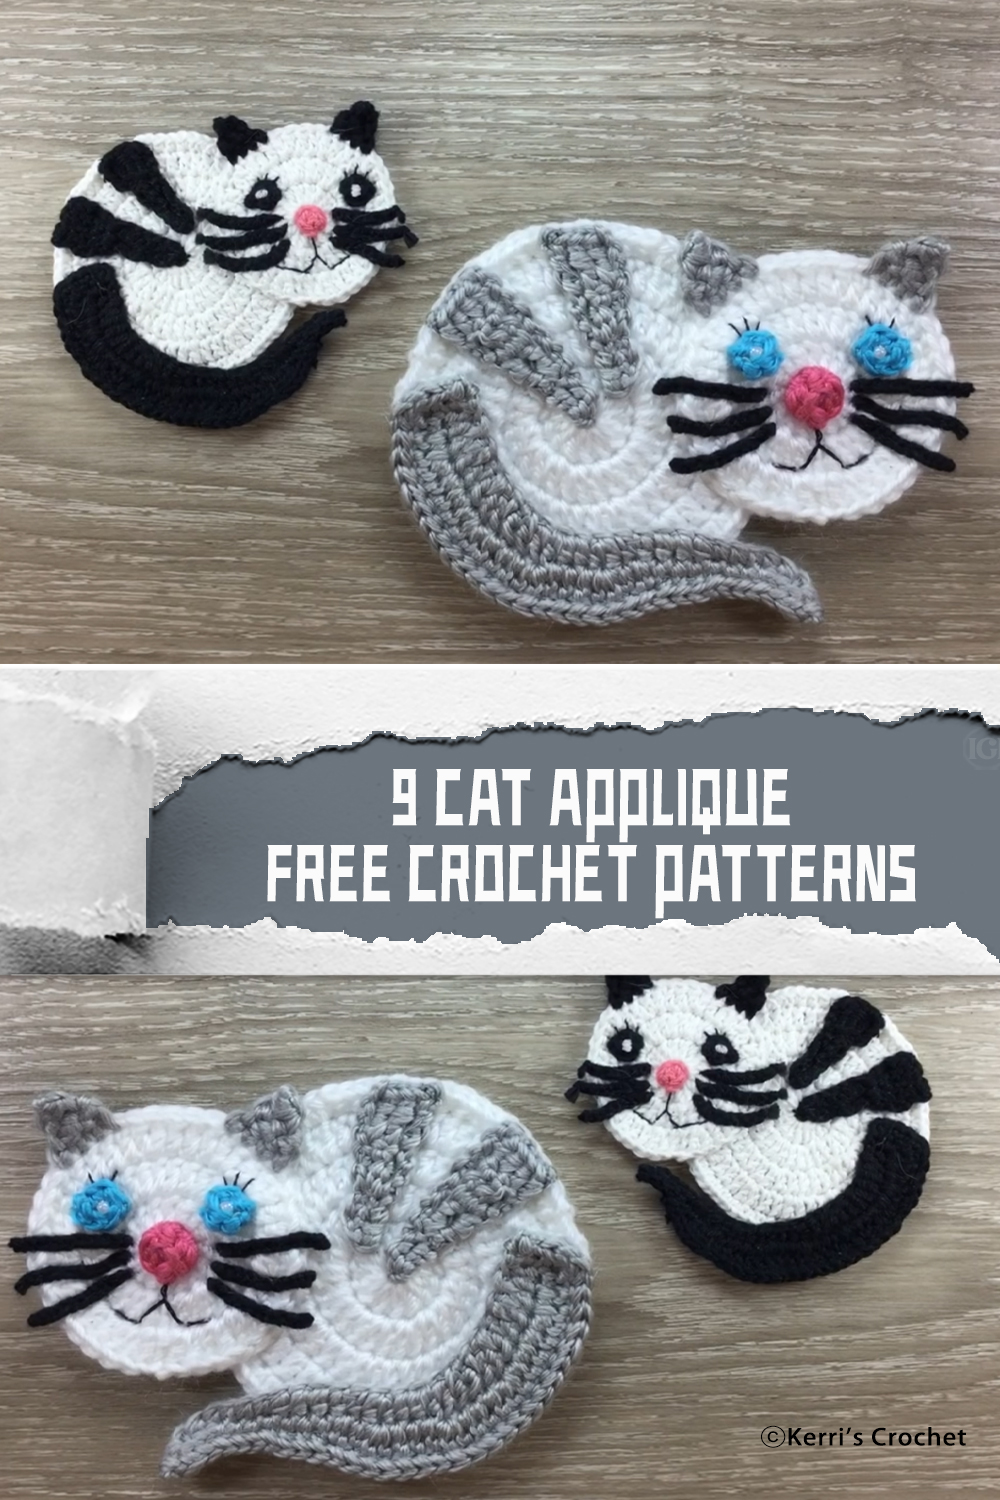 9 Cat Applique FREE Crochet Patterns